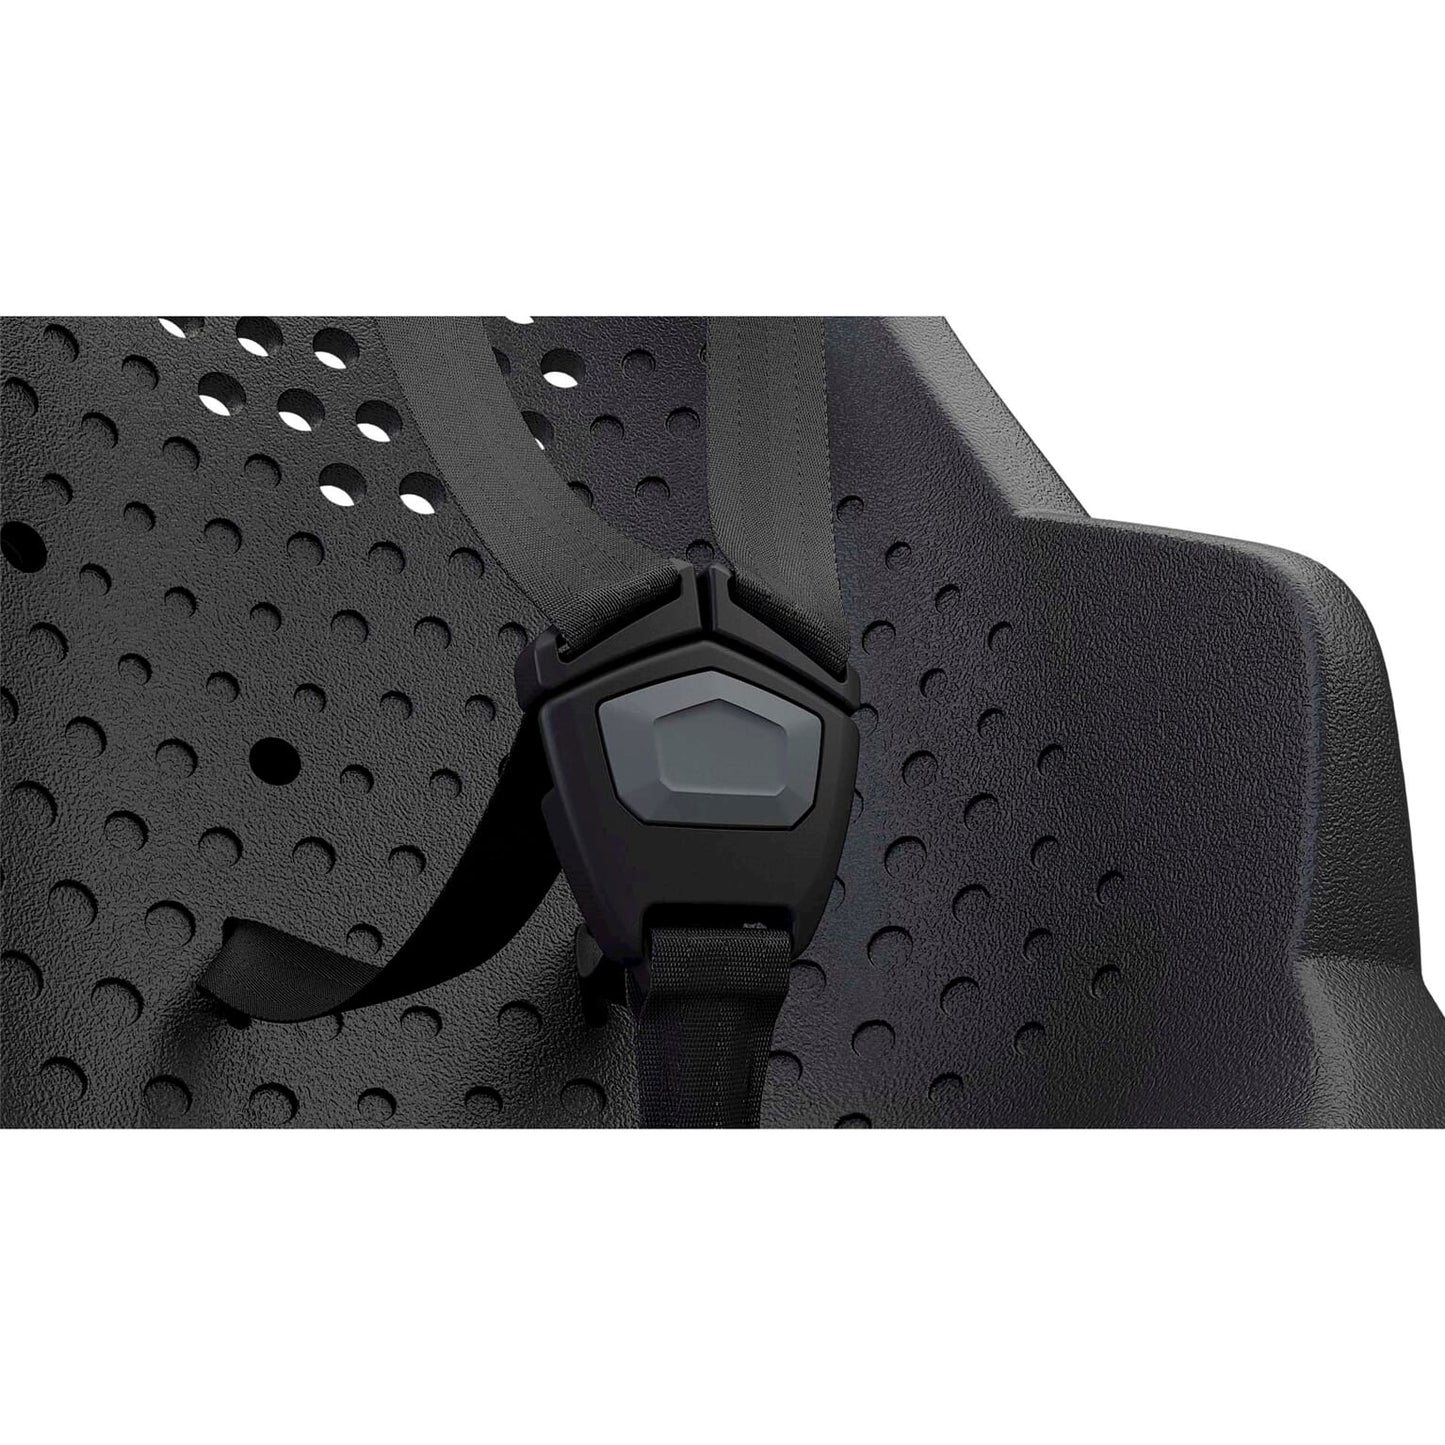 Yepp mini 2 sedile anteriore nero. Diametro dello stelo 22-28 mm